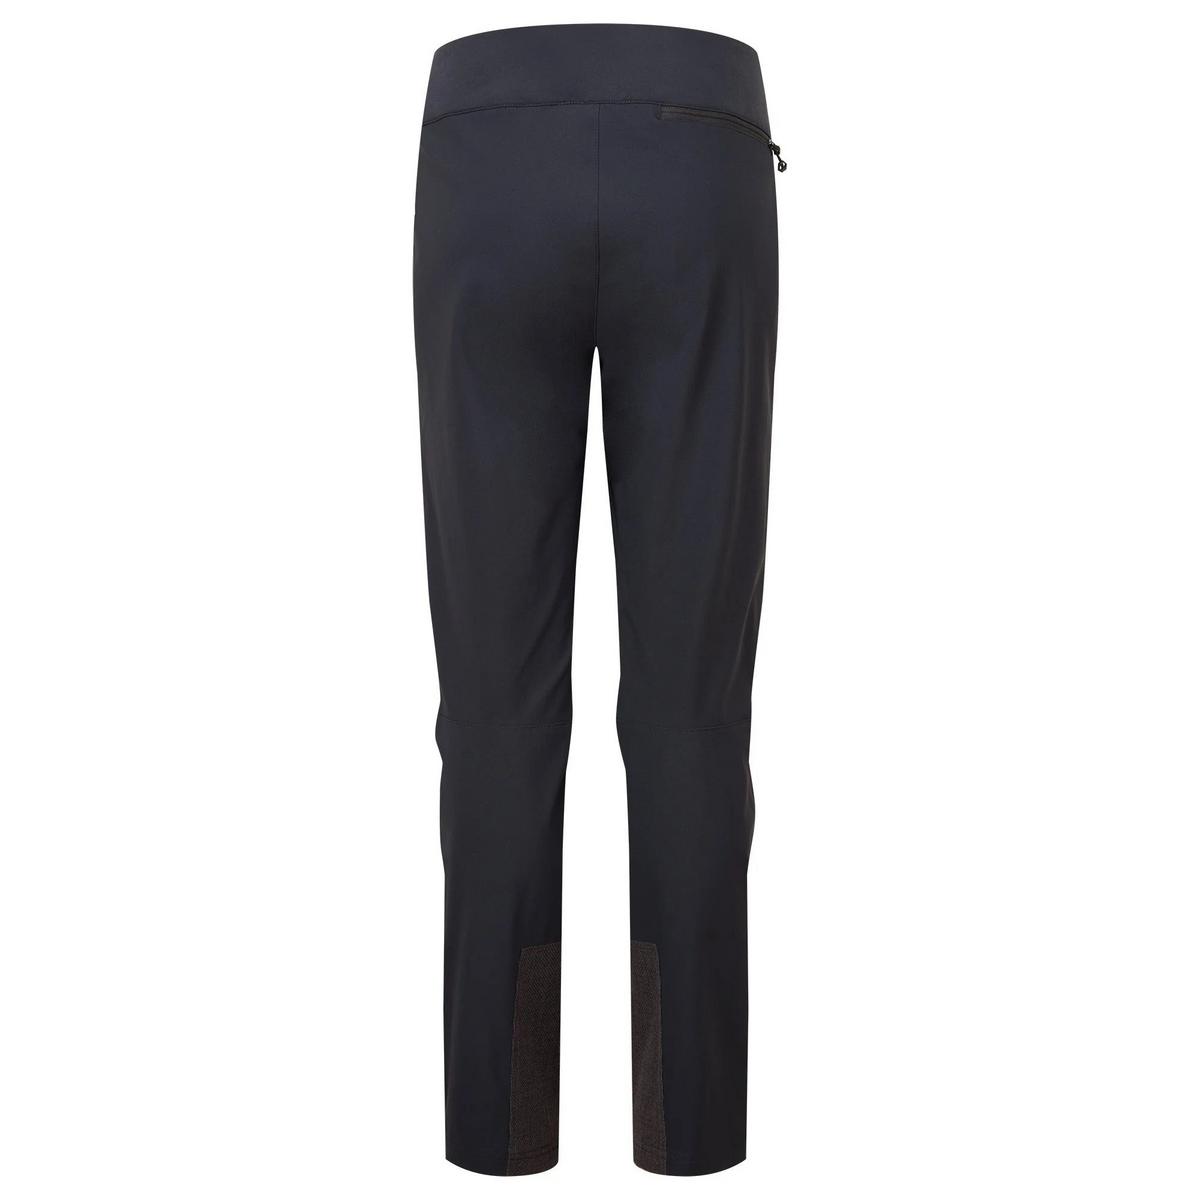 Montane Women's Terra Stretch XT Pants (Regular) - Black